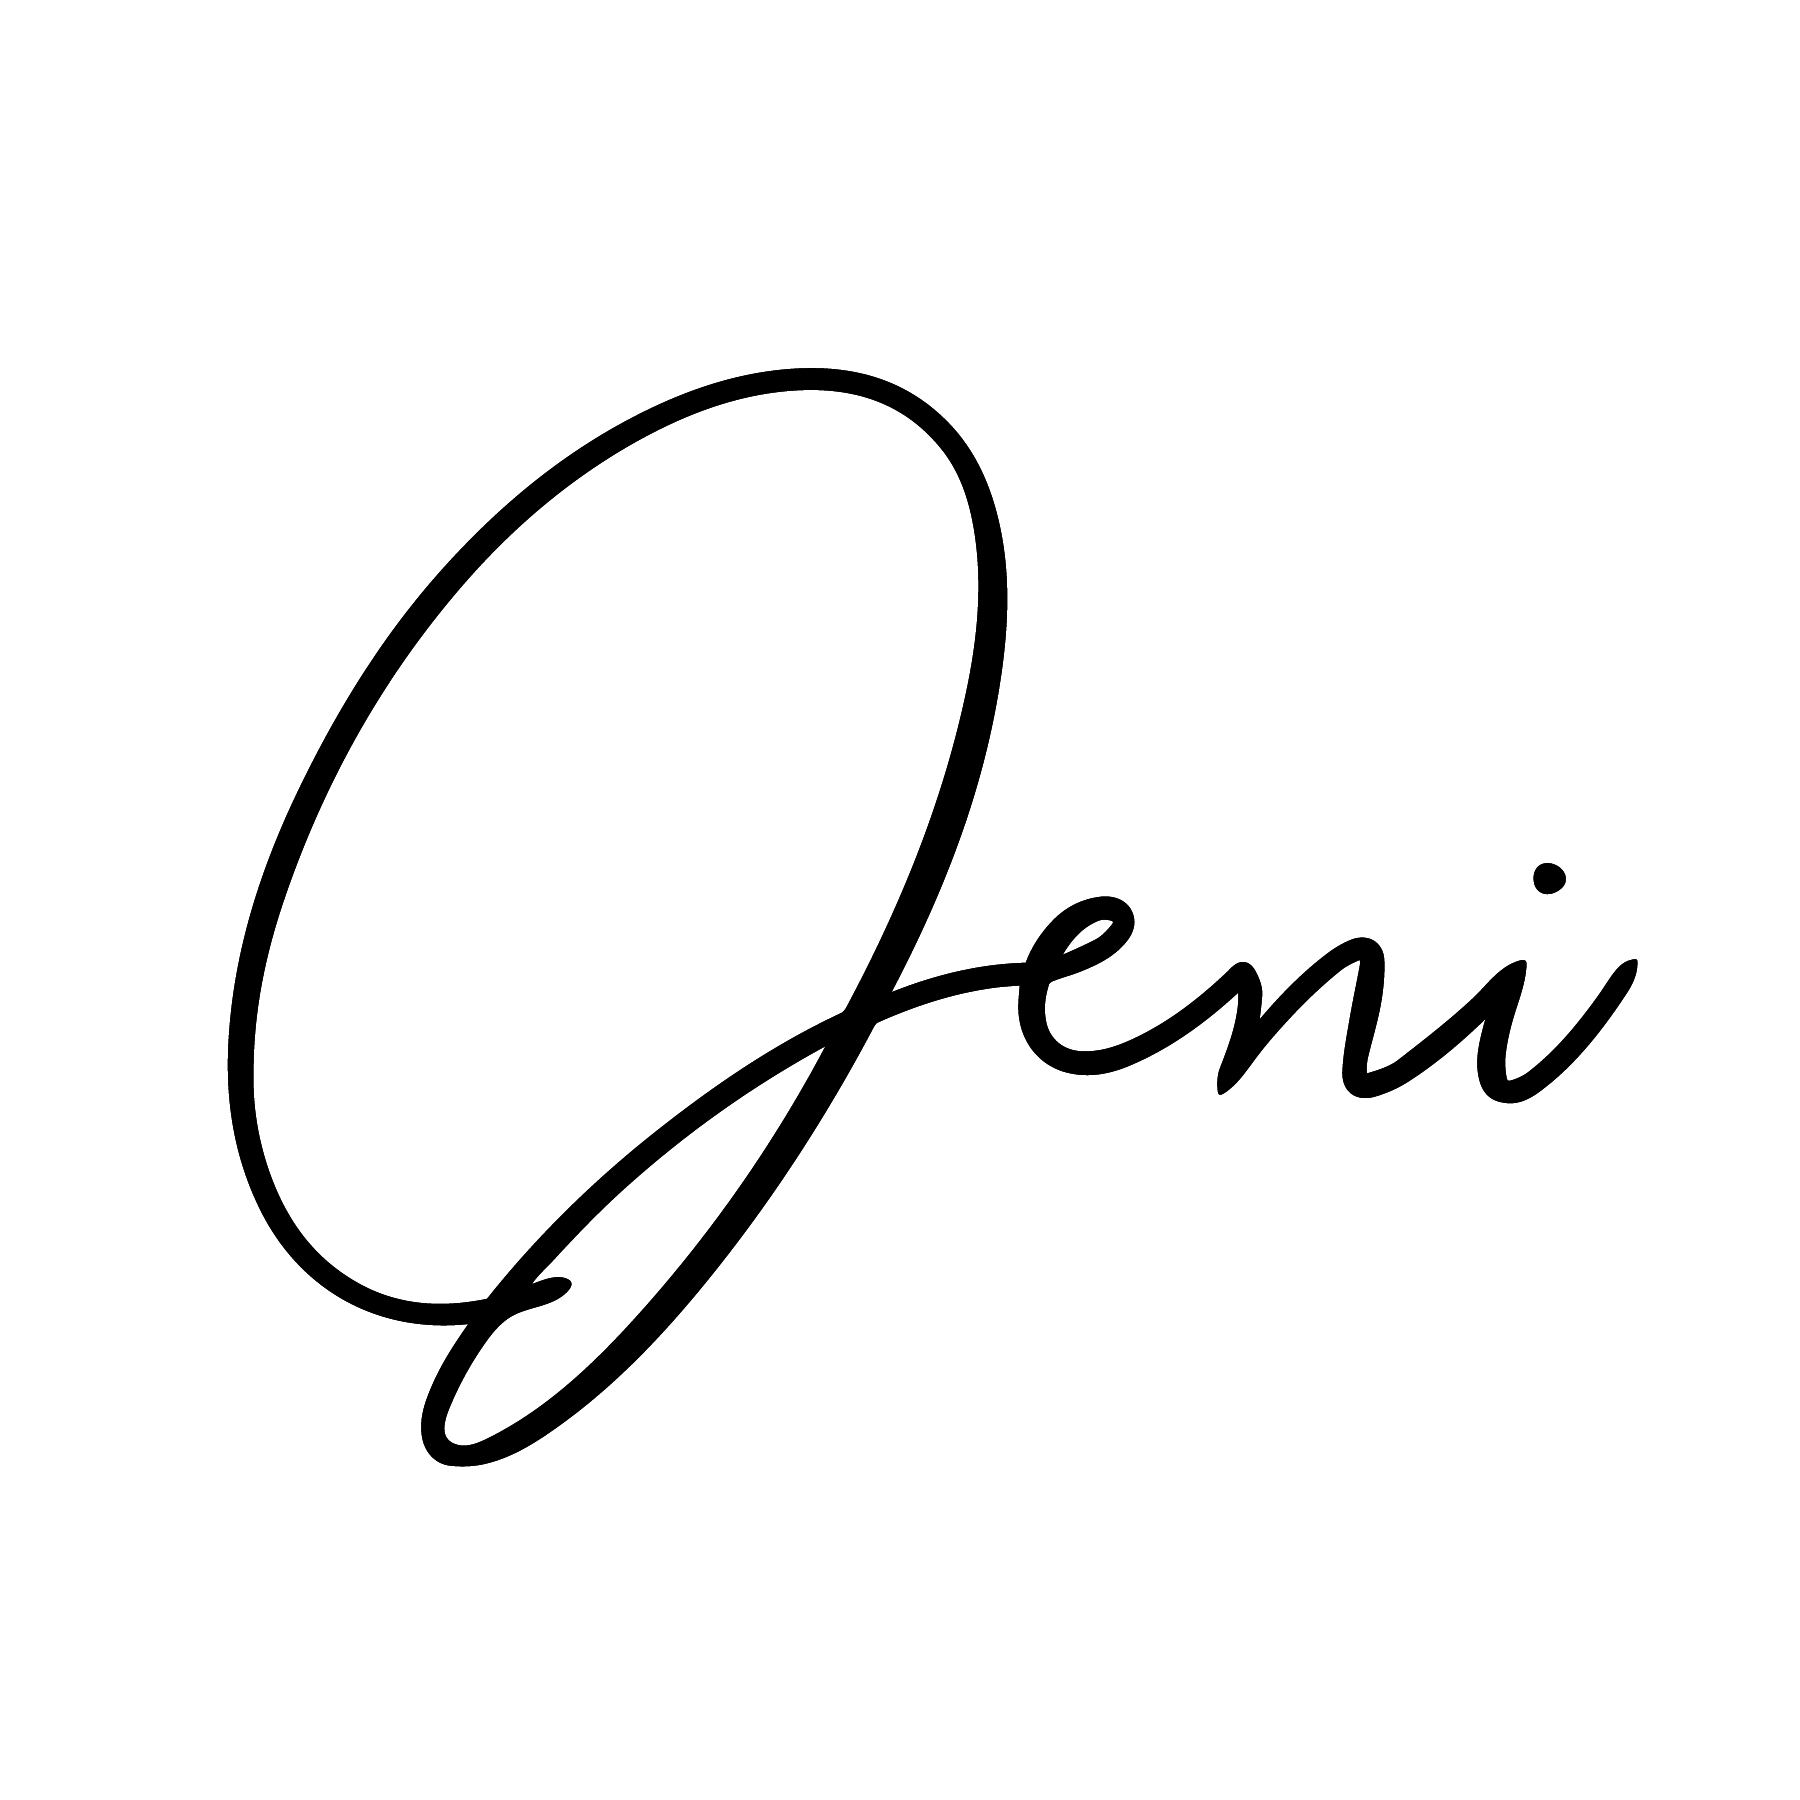 The logo of emw